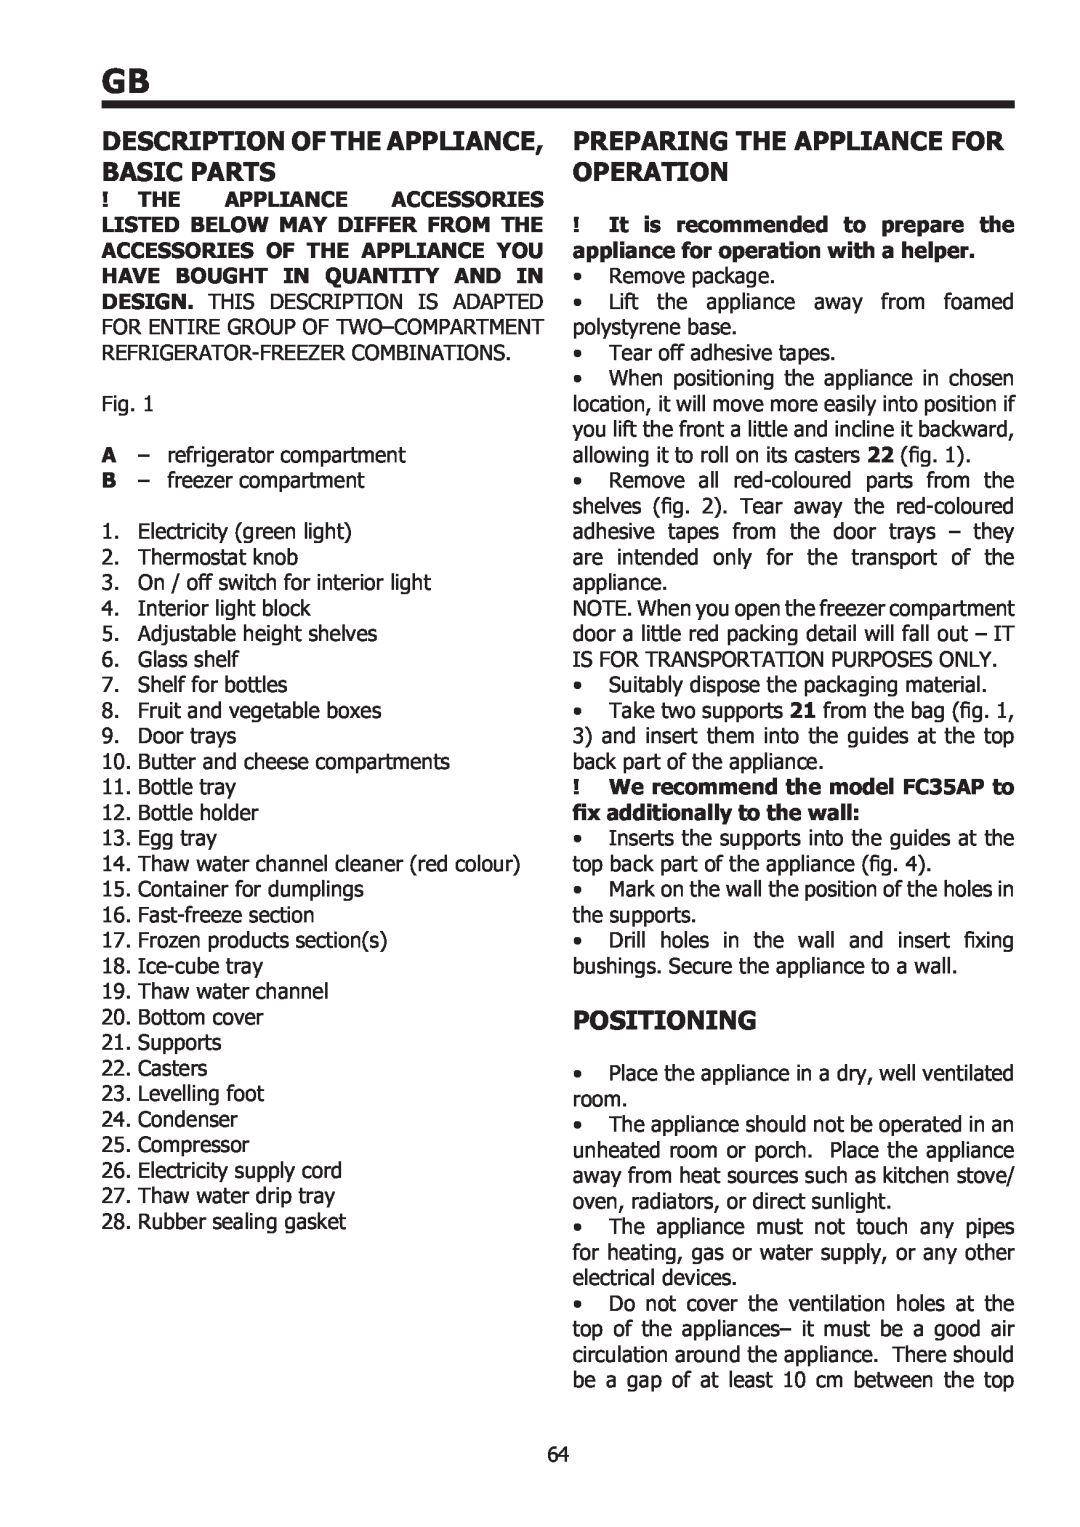 Smeg FC35AP, FC32AP manual Description Of The Appliance, Basic Parts, Preparing The Appliance For Operation, Positioning 